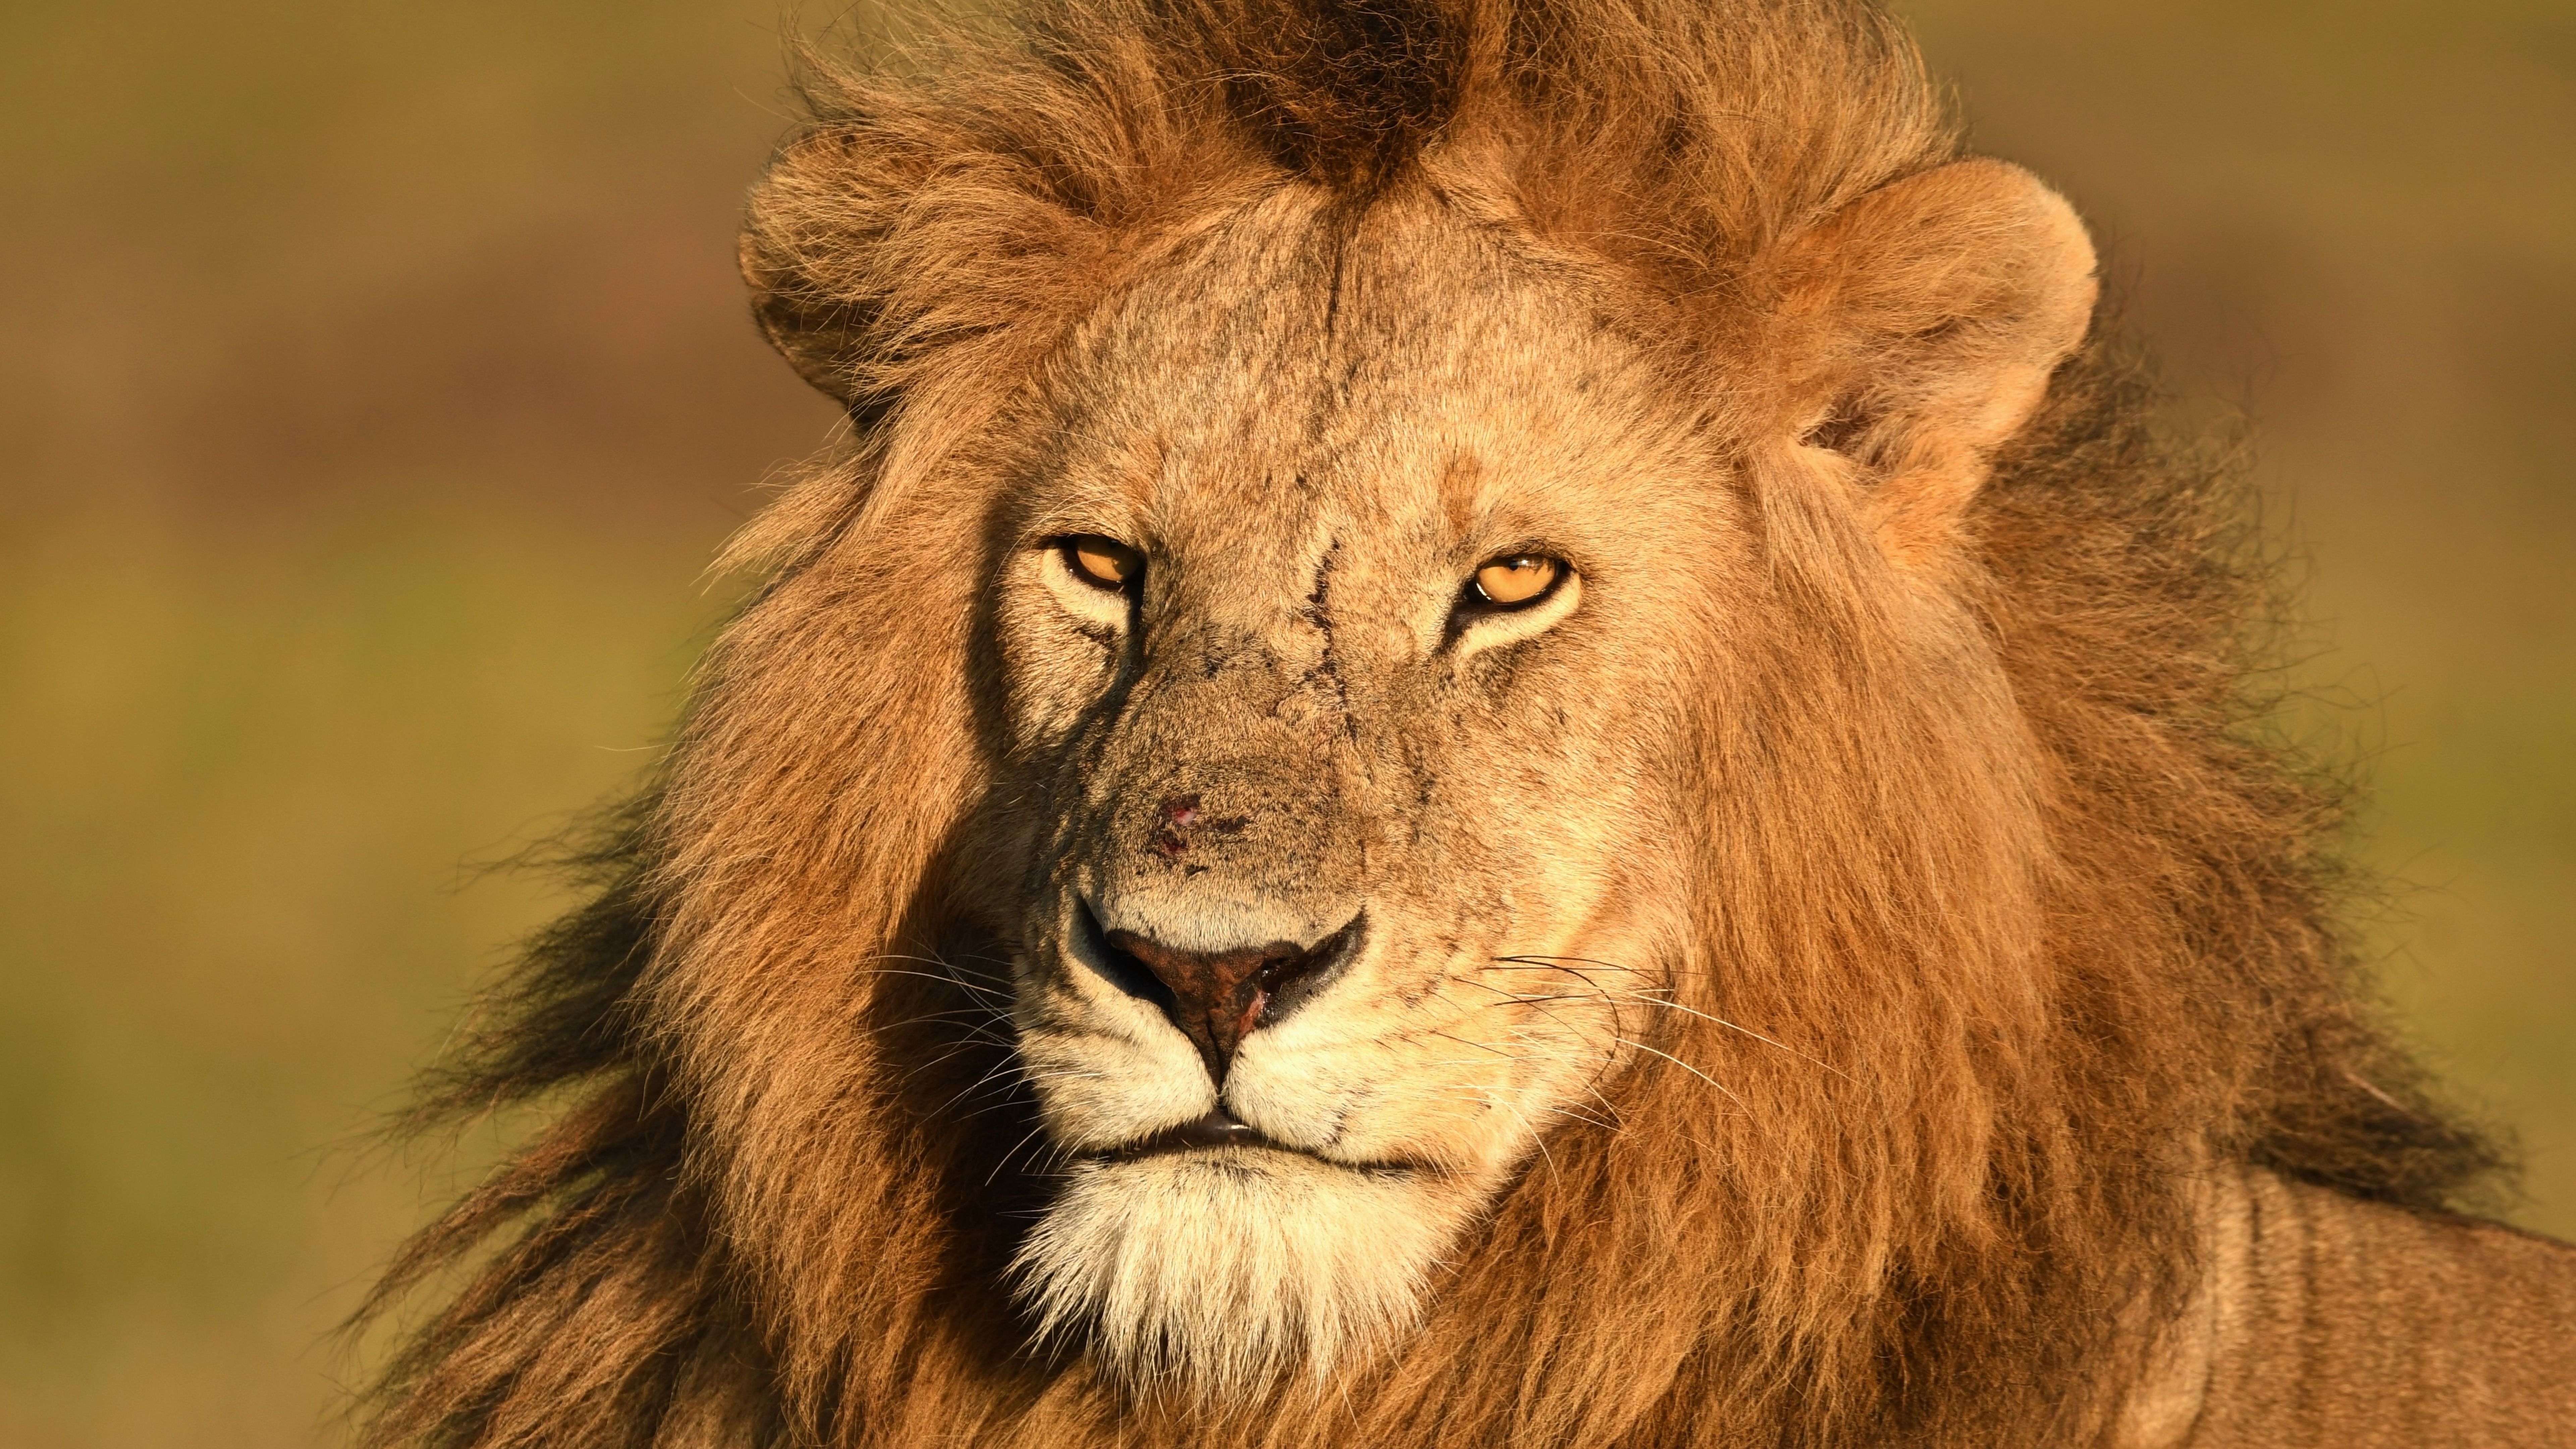 7680x4320 Lion Masai Mara Kenya 8K Wallpaper, HD Animals 4K Wallpapers,  Images, Photos and Background - Wallpapers Den